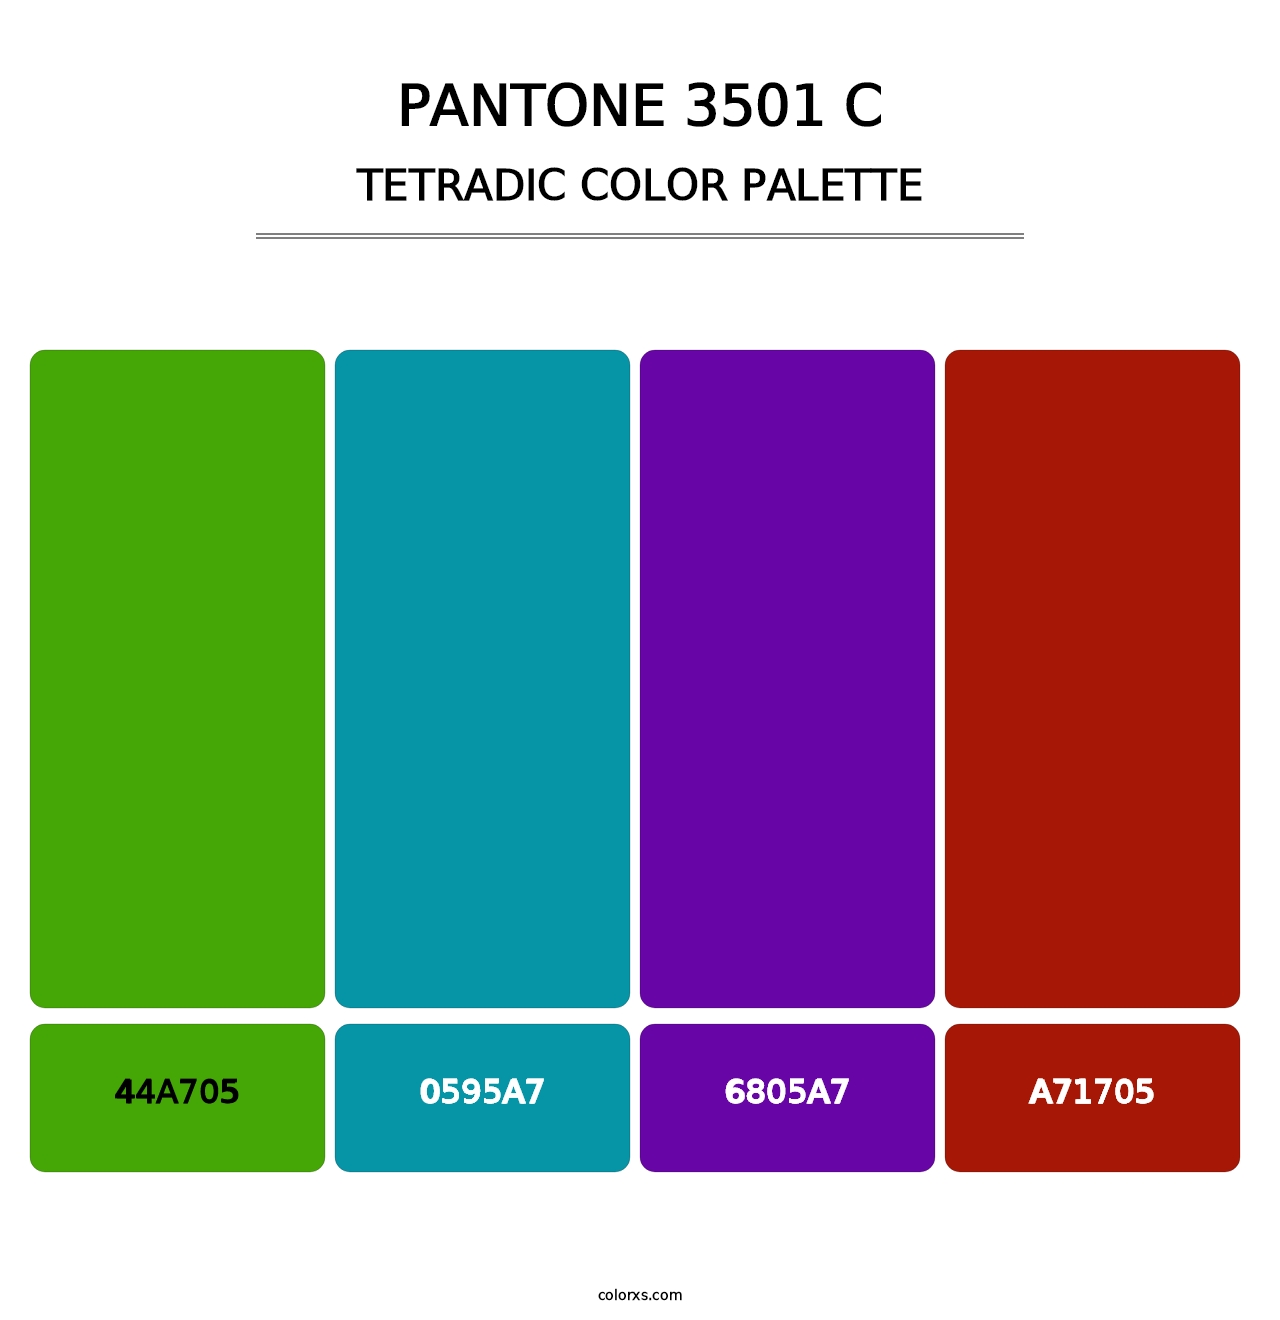 PANTONE 3501 C - Tetradic Color Palette